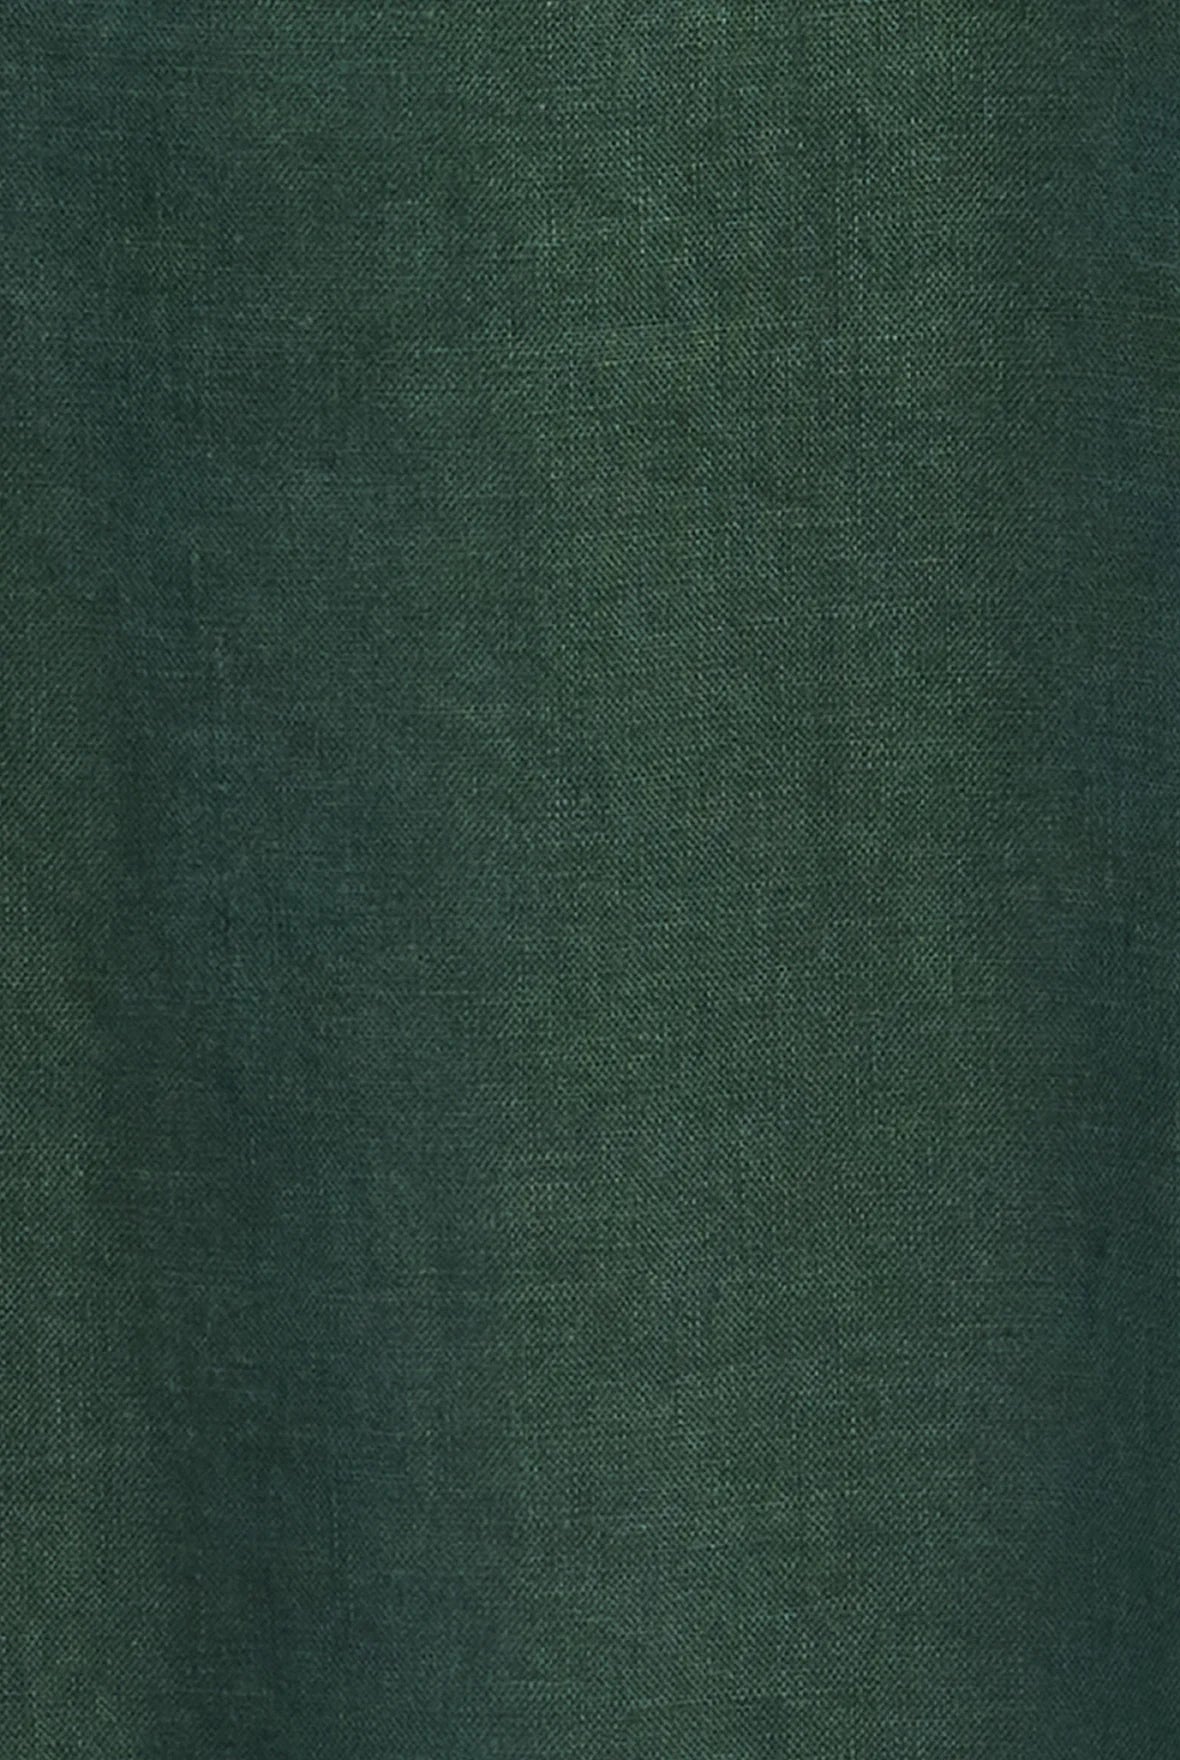 Essential Linen Slip Dress in Sherwood Green